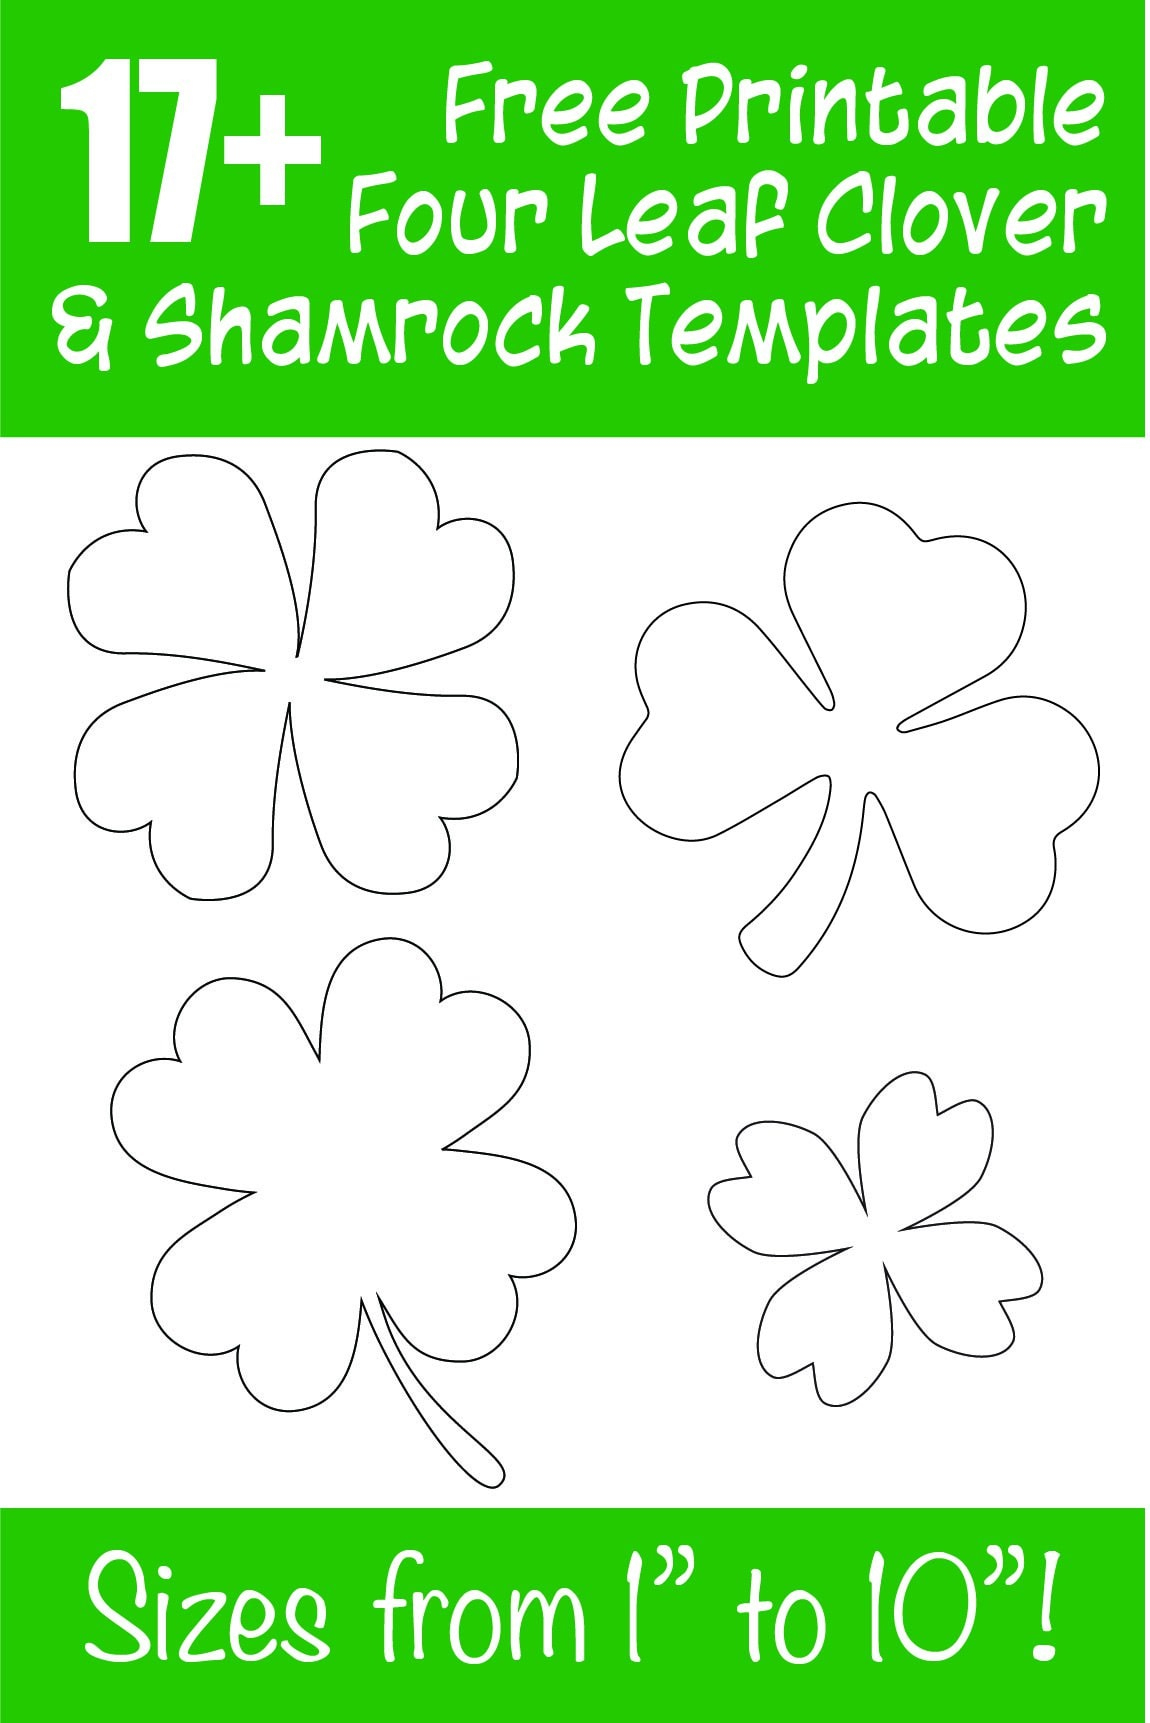 17+ Free Printable Four Leaf Clover &amp;amp; Shamrock Templates - The - Shamrock Template Free Printable